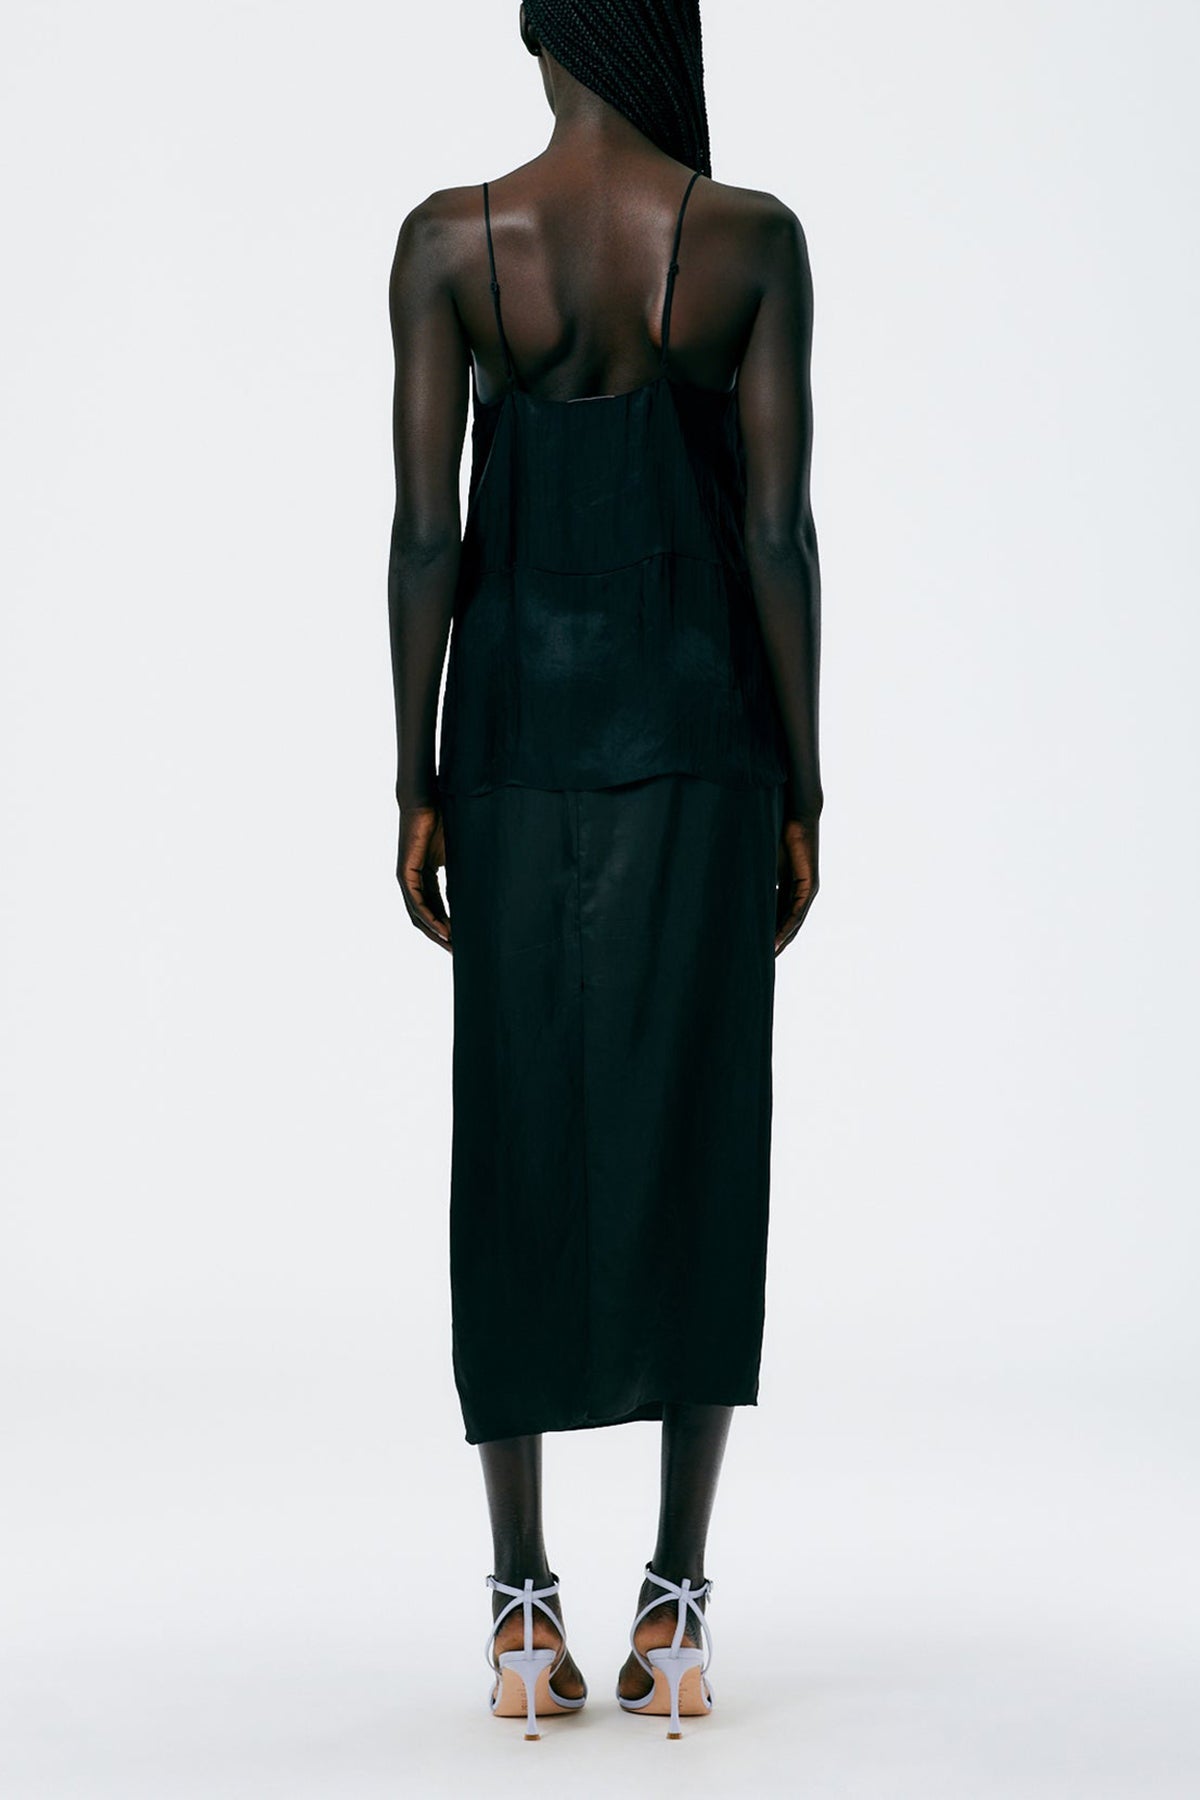 The Slip Skirt in Black - shop-olivia.com